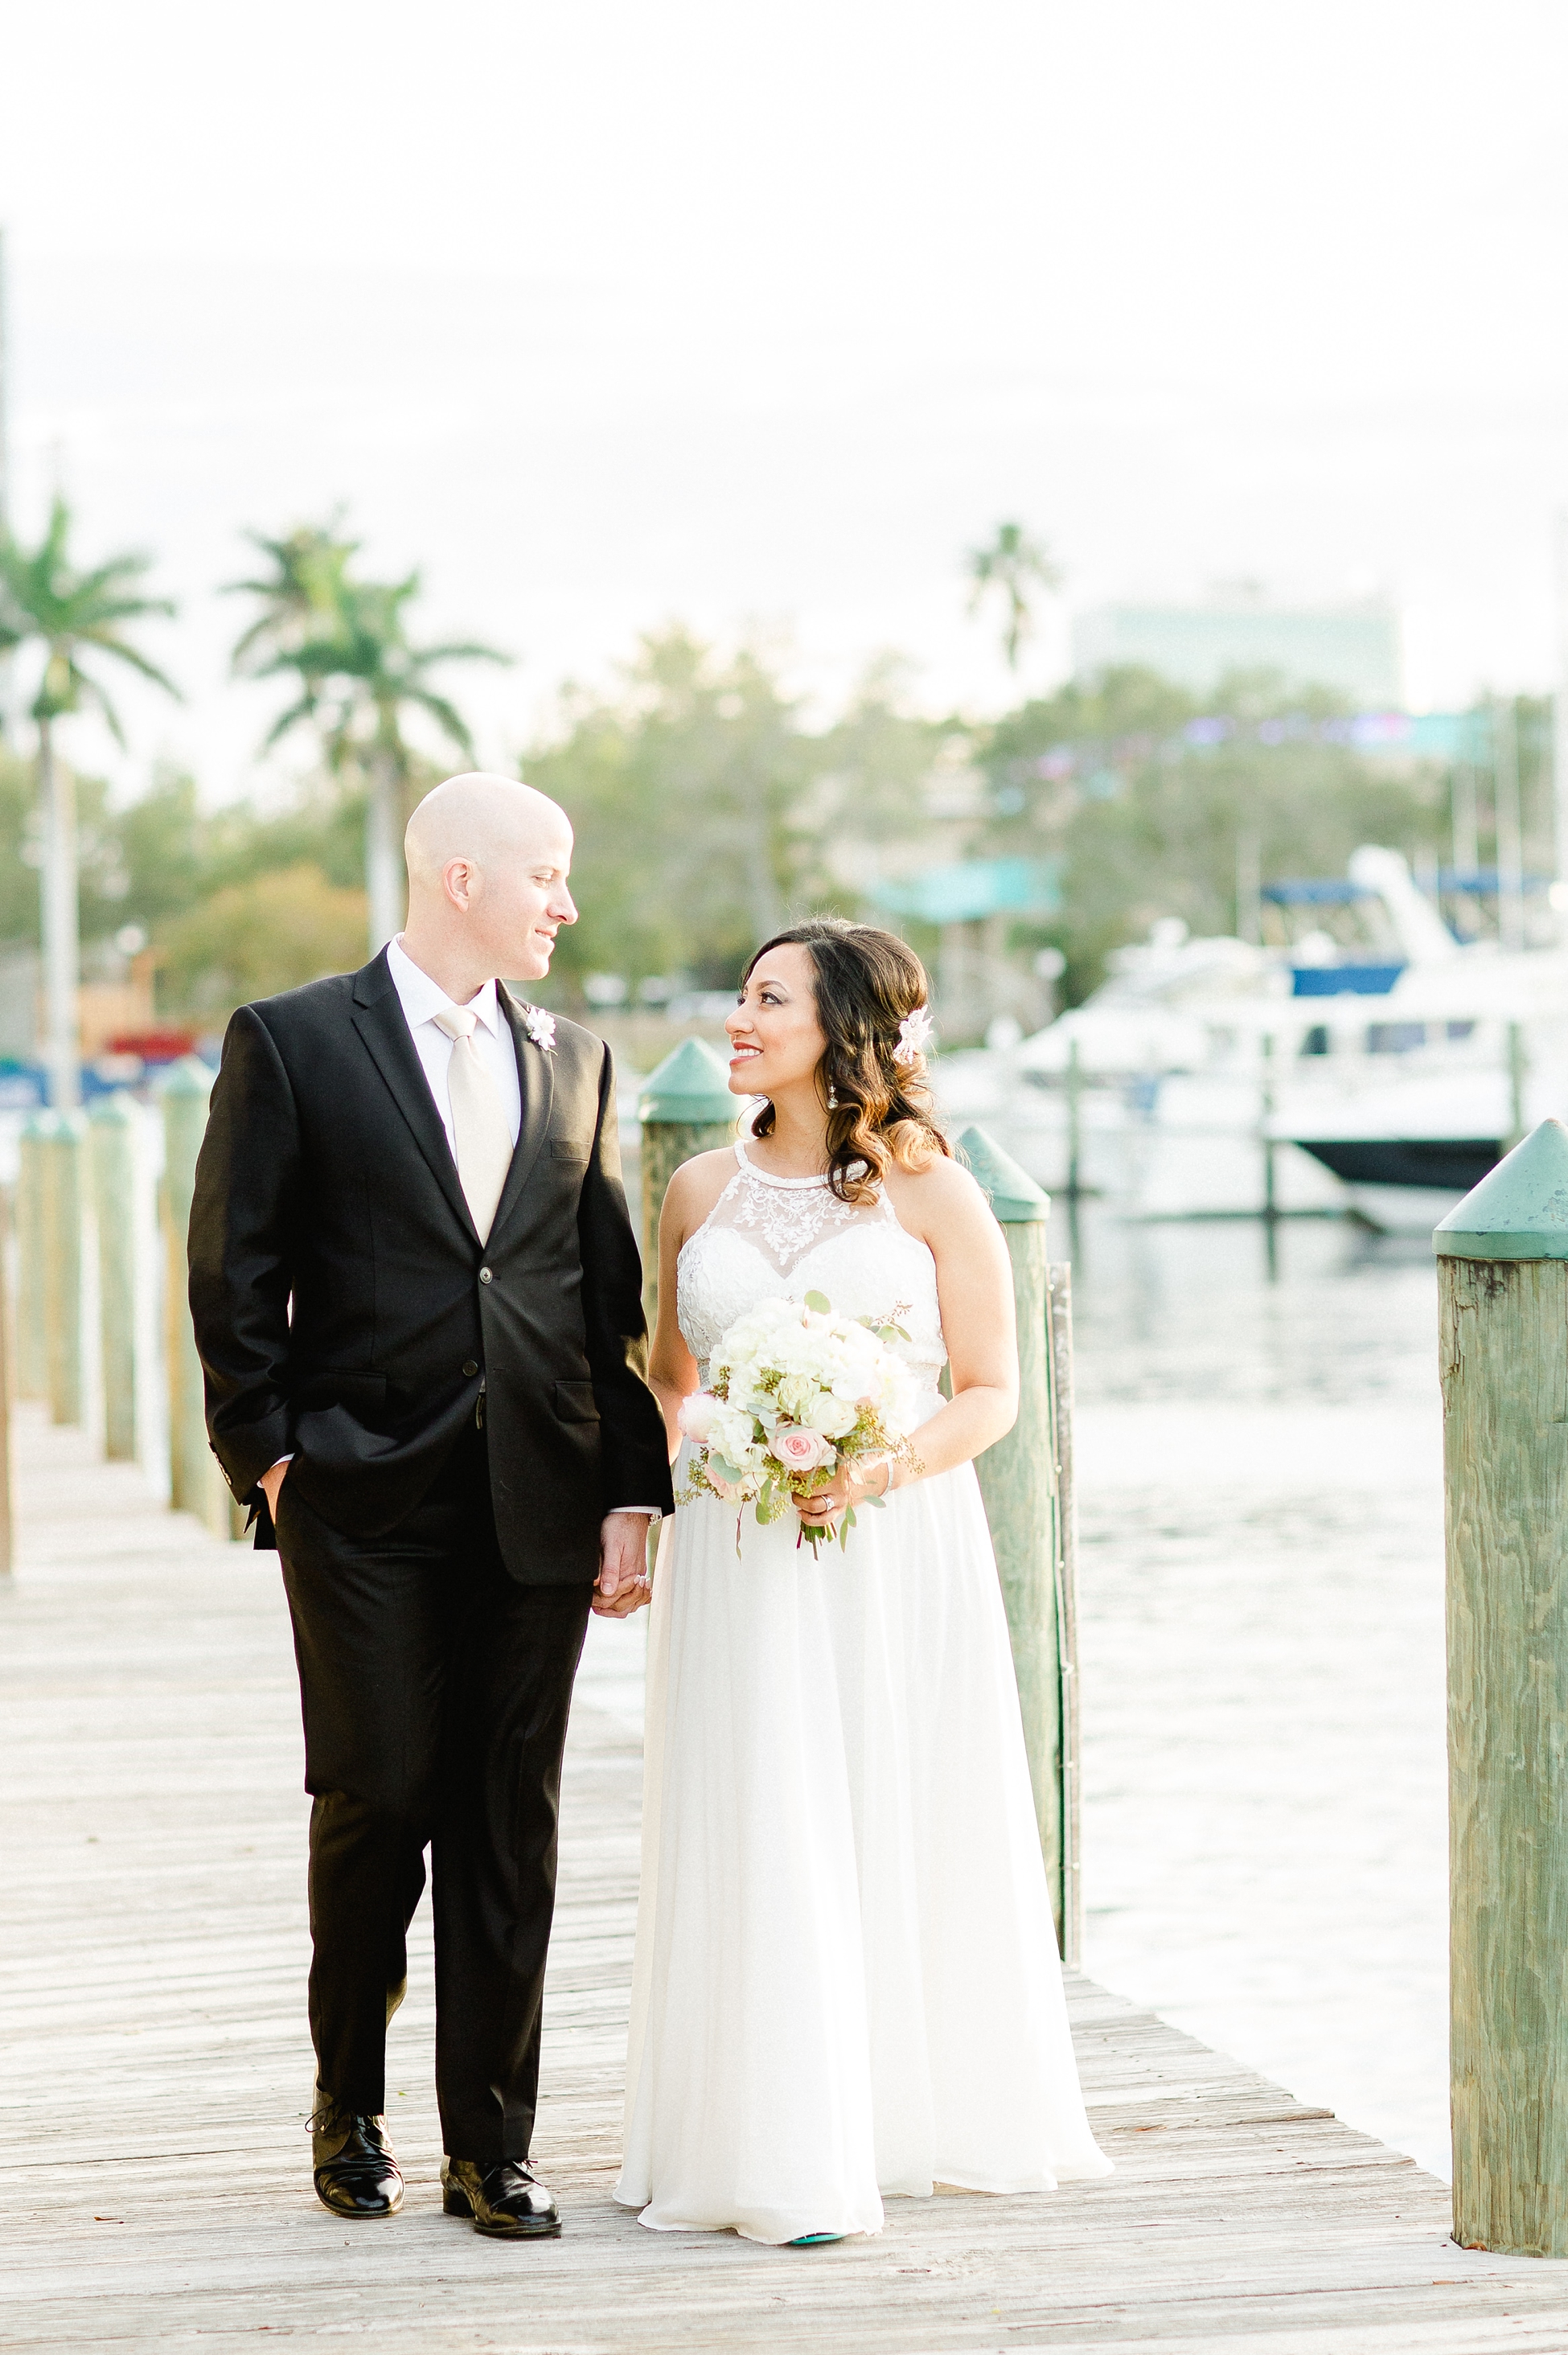 Pier 22 Wedding Ceremony | © Ailyn La Torre Photography 2017